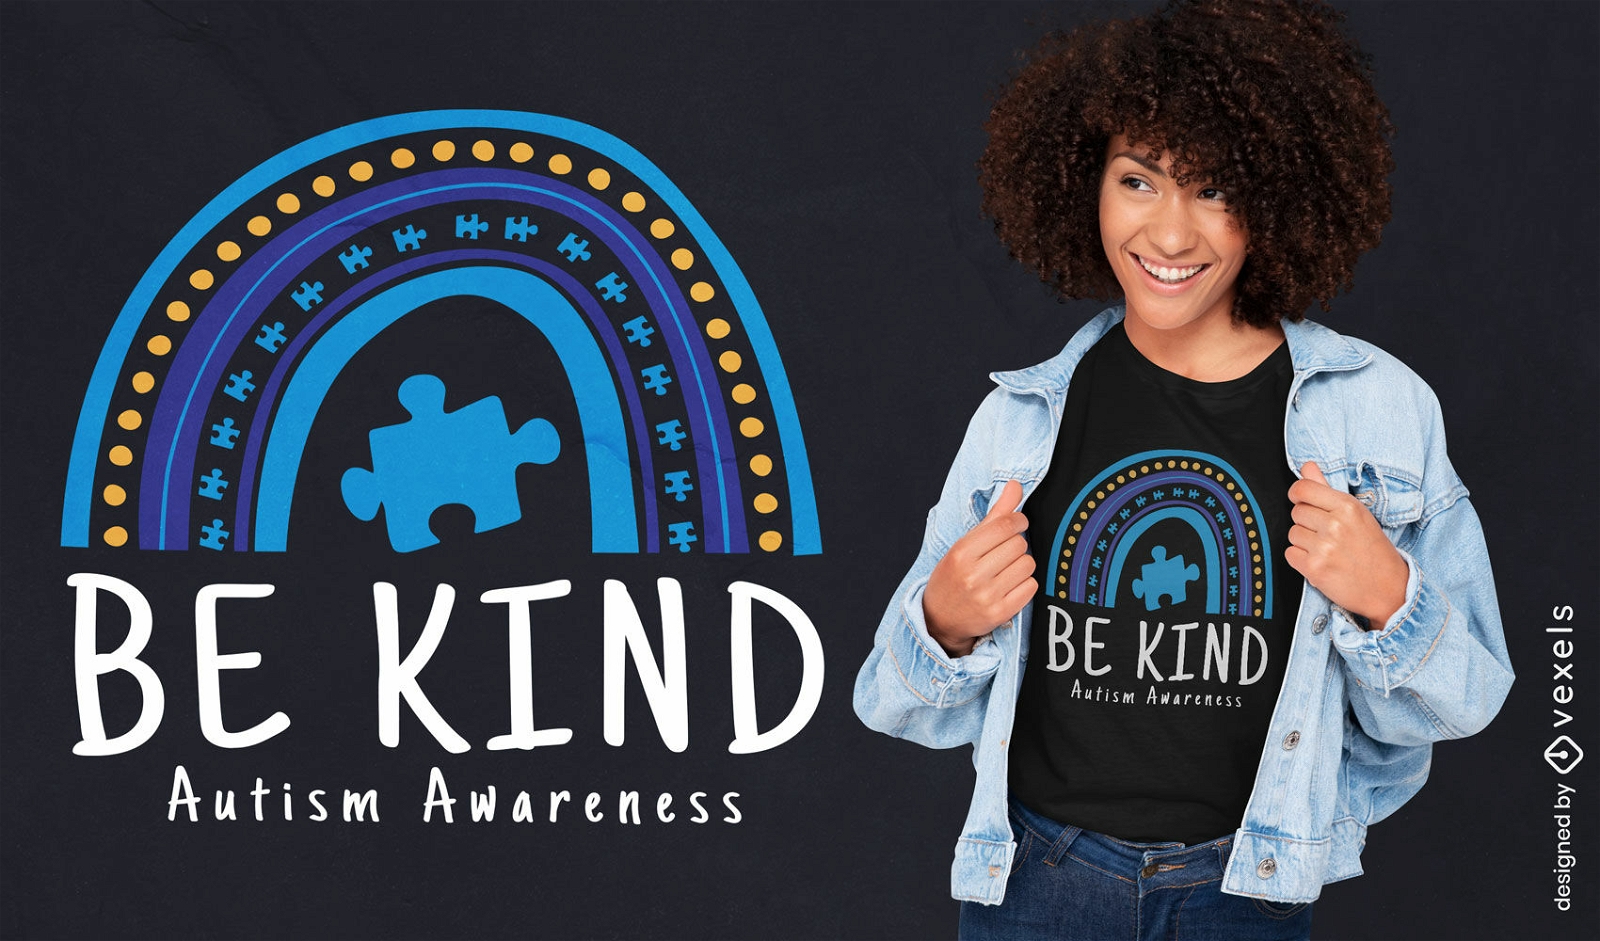 Be kind autism awareness quote t-shirt design